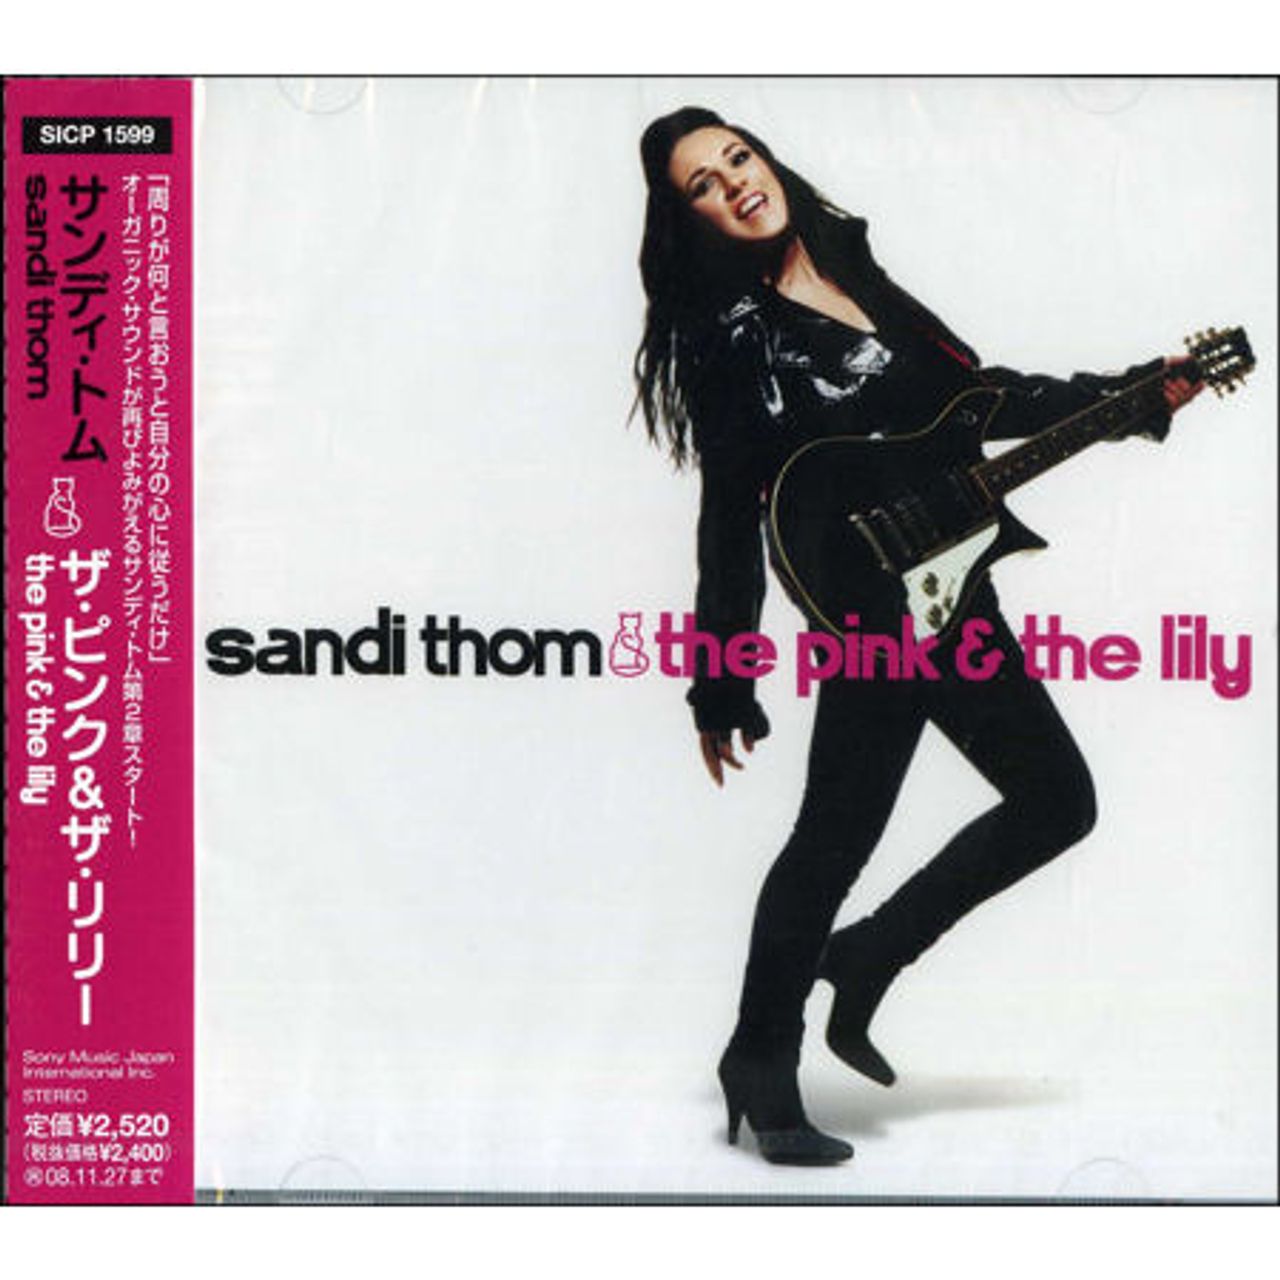 Sandi Thom The Pink & The Lily Japanese CD album (CDLP) SICP-1599